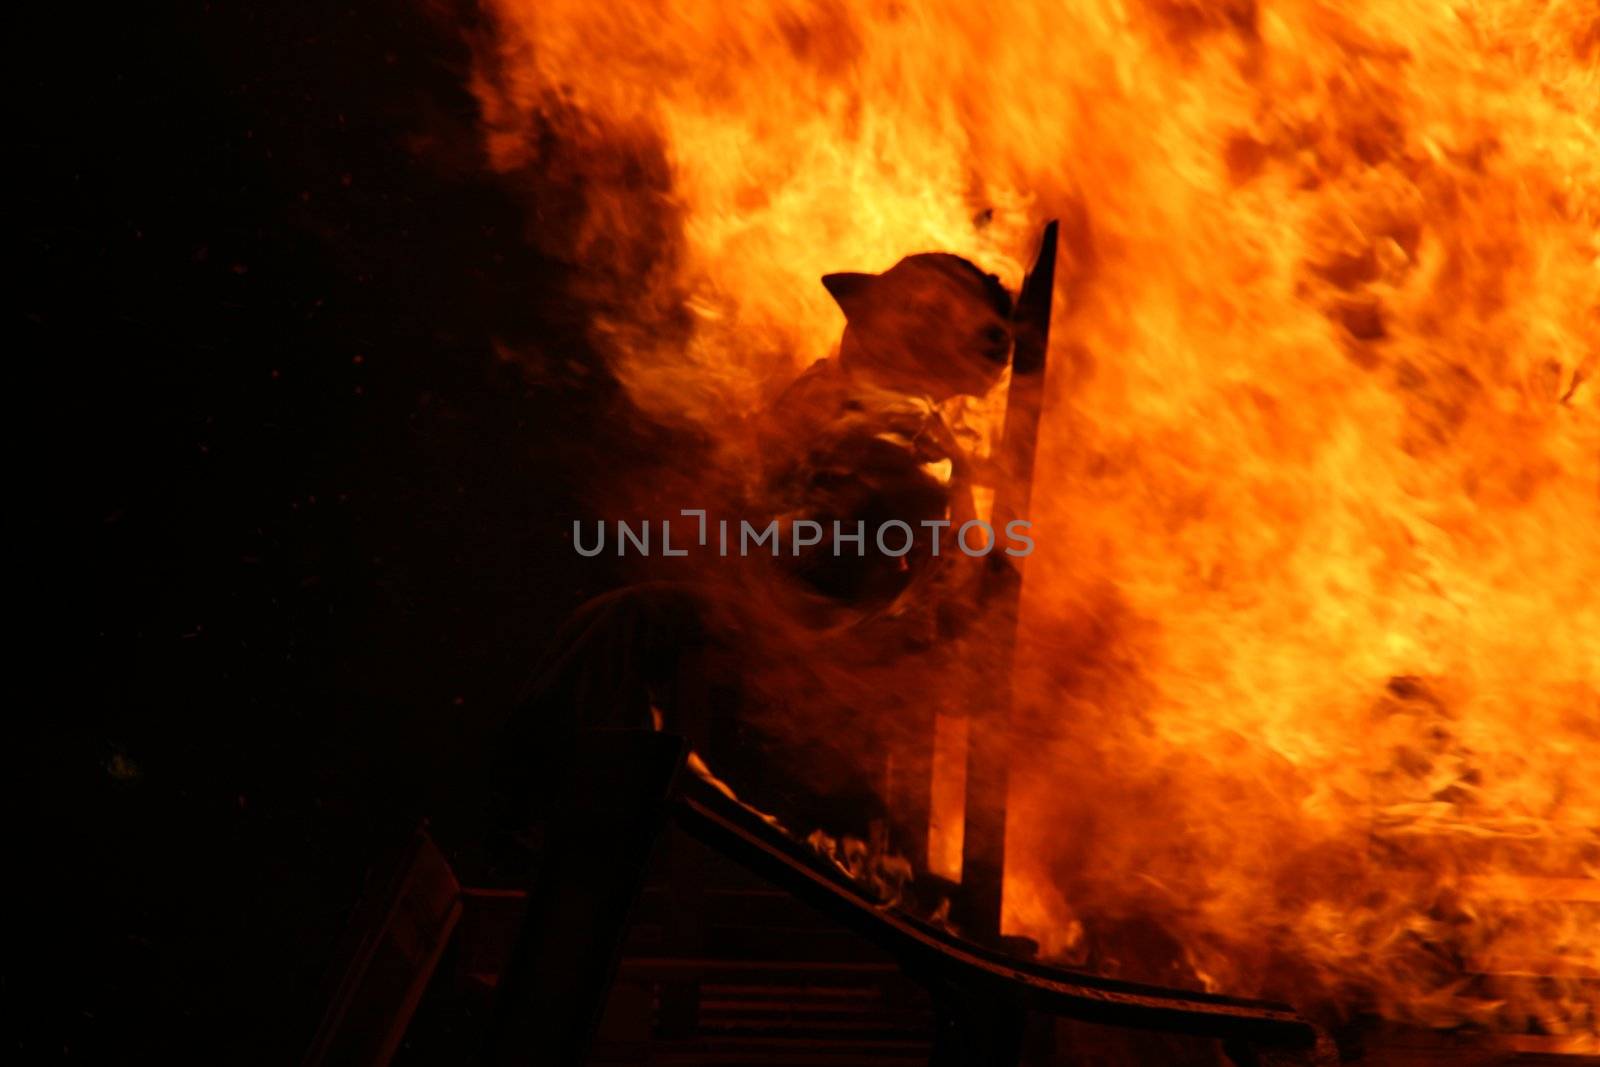 celebration of st joan, a burning man on flames